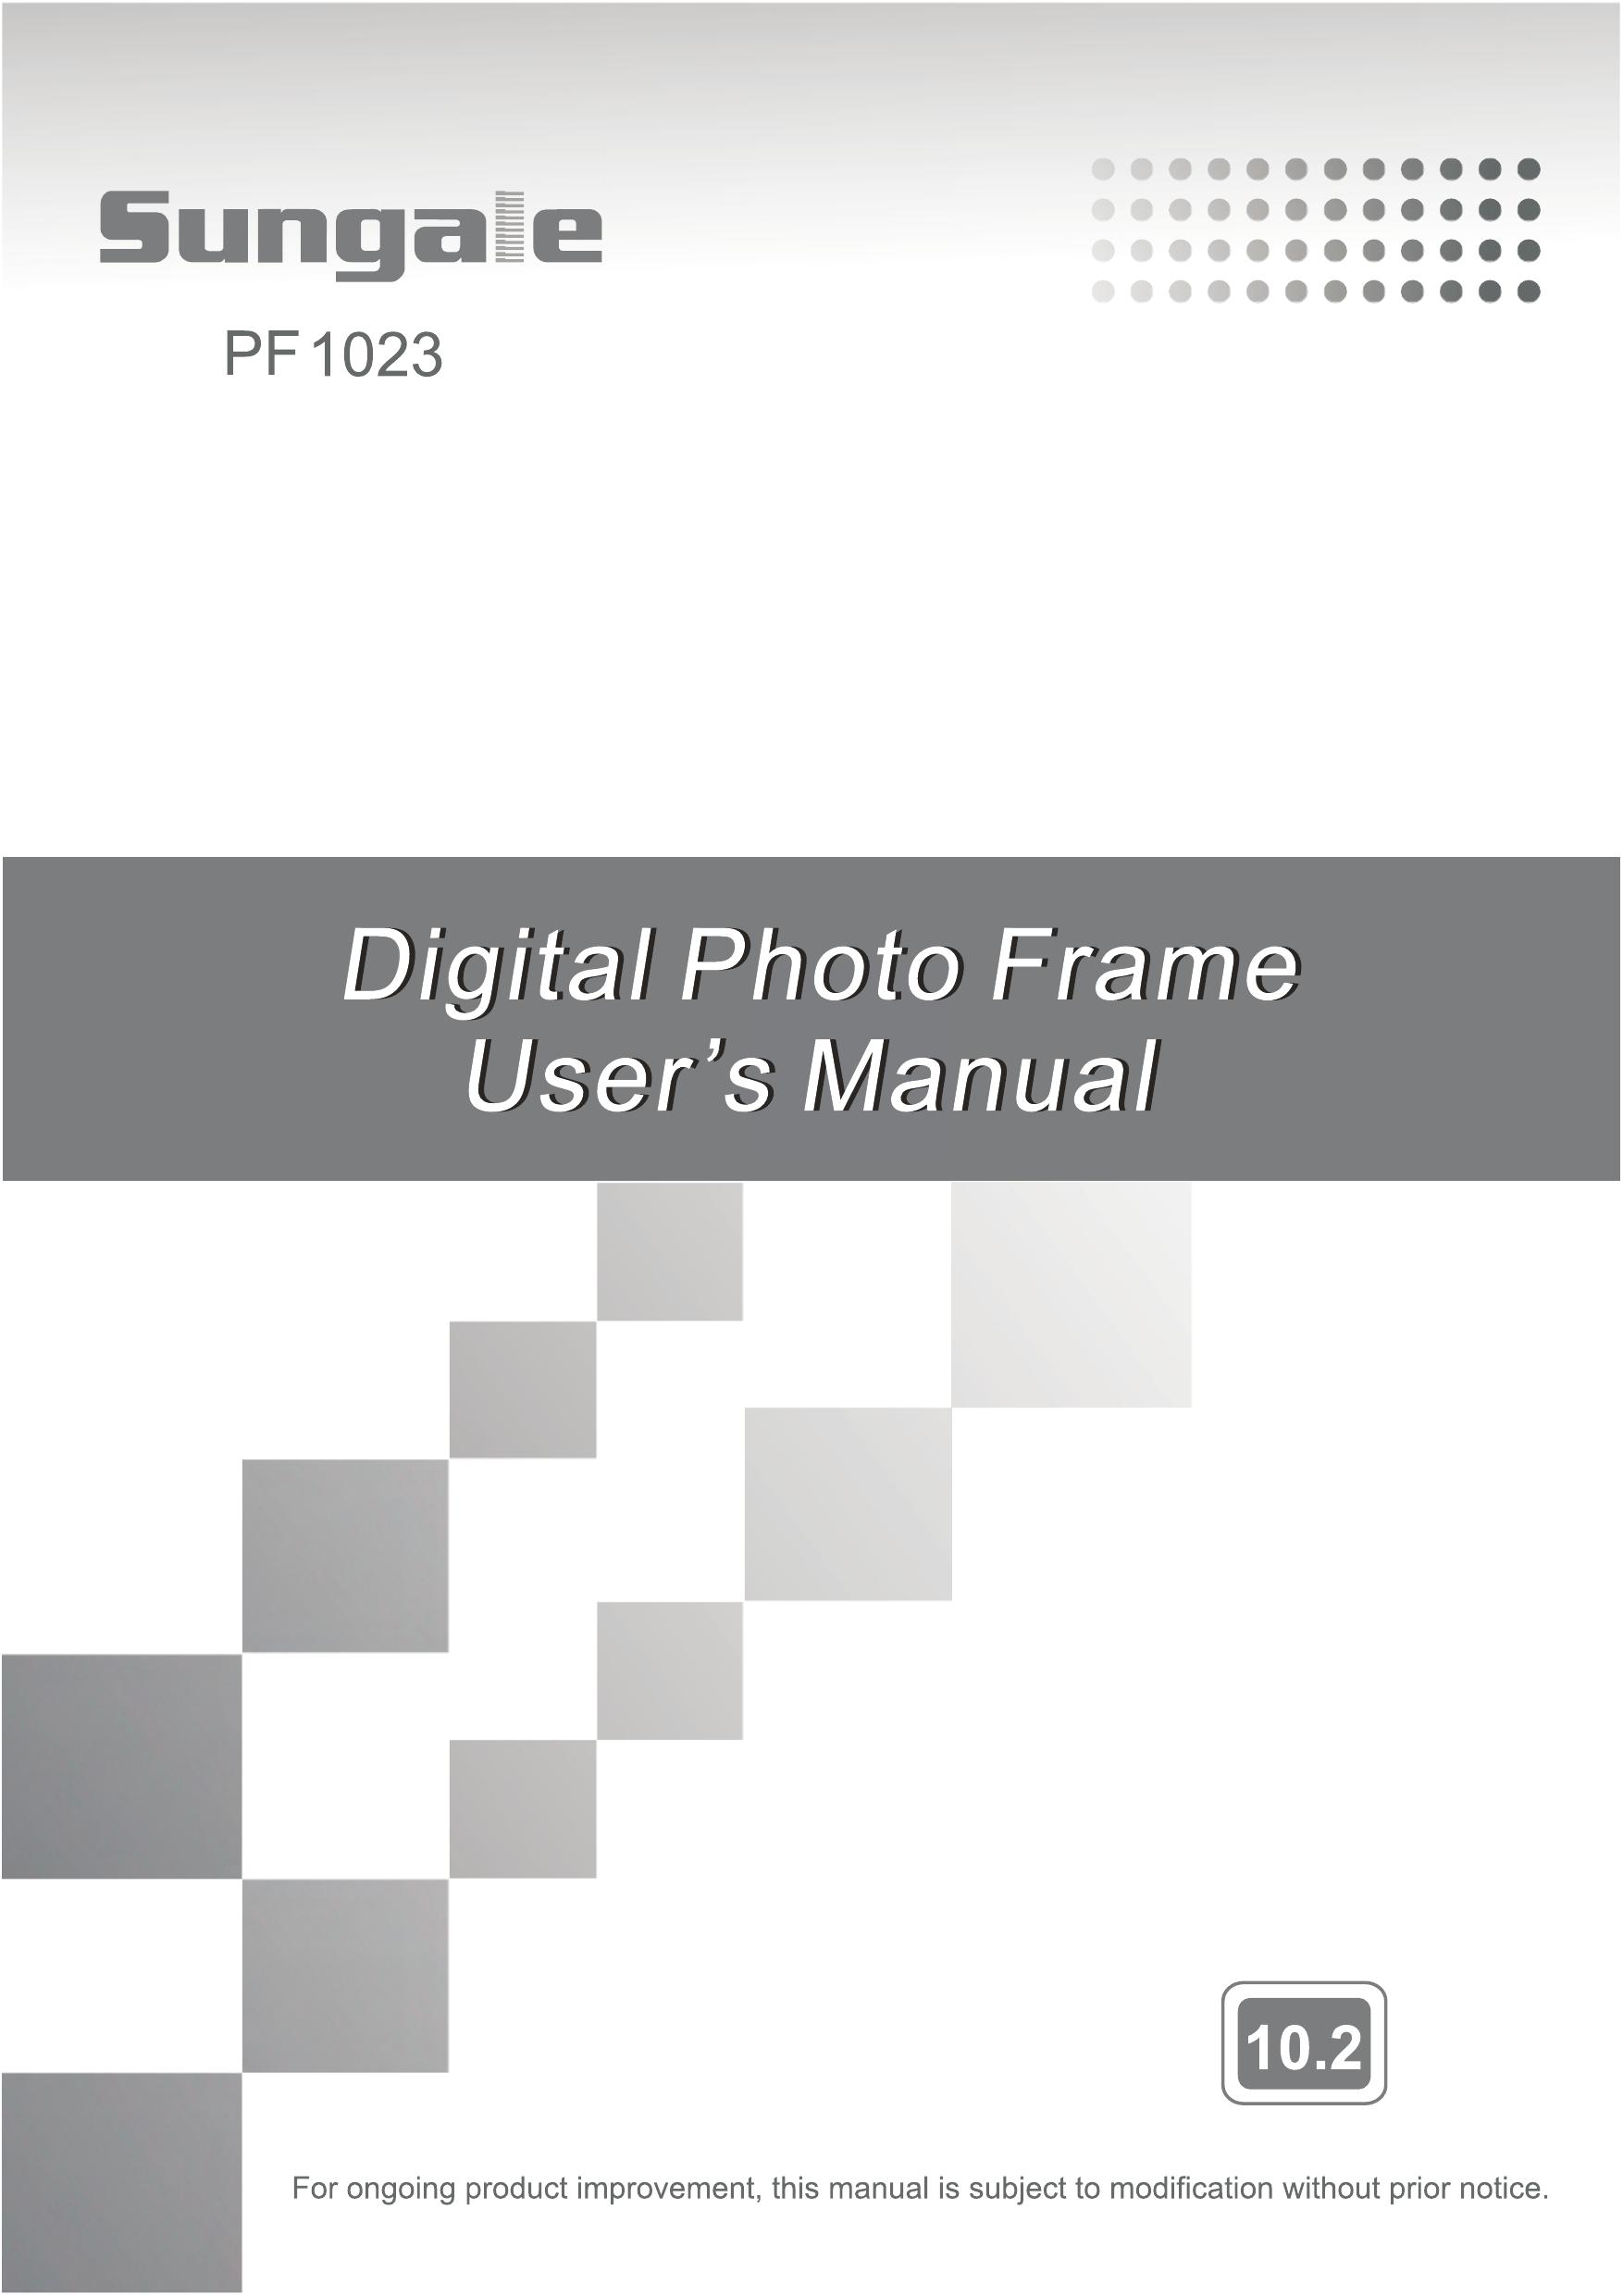 Sungale PF 1023 Digital Photo Frame User Manual